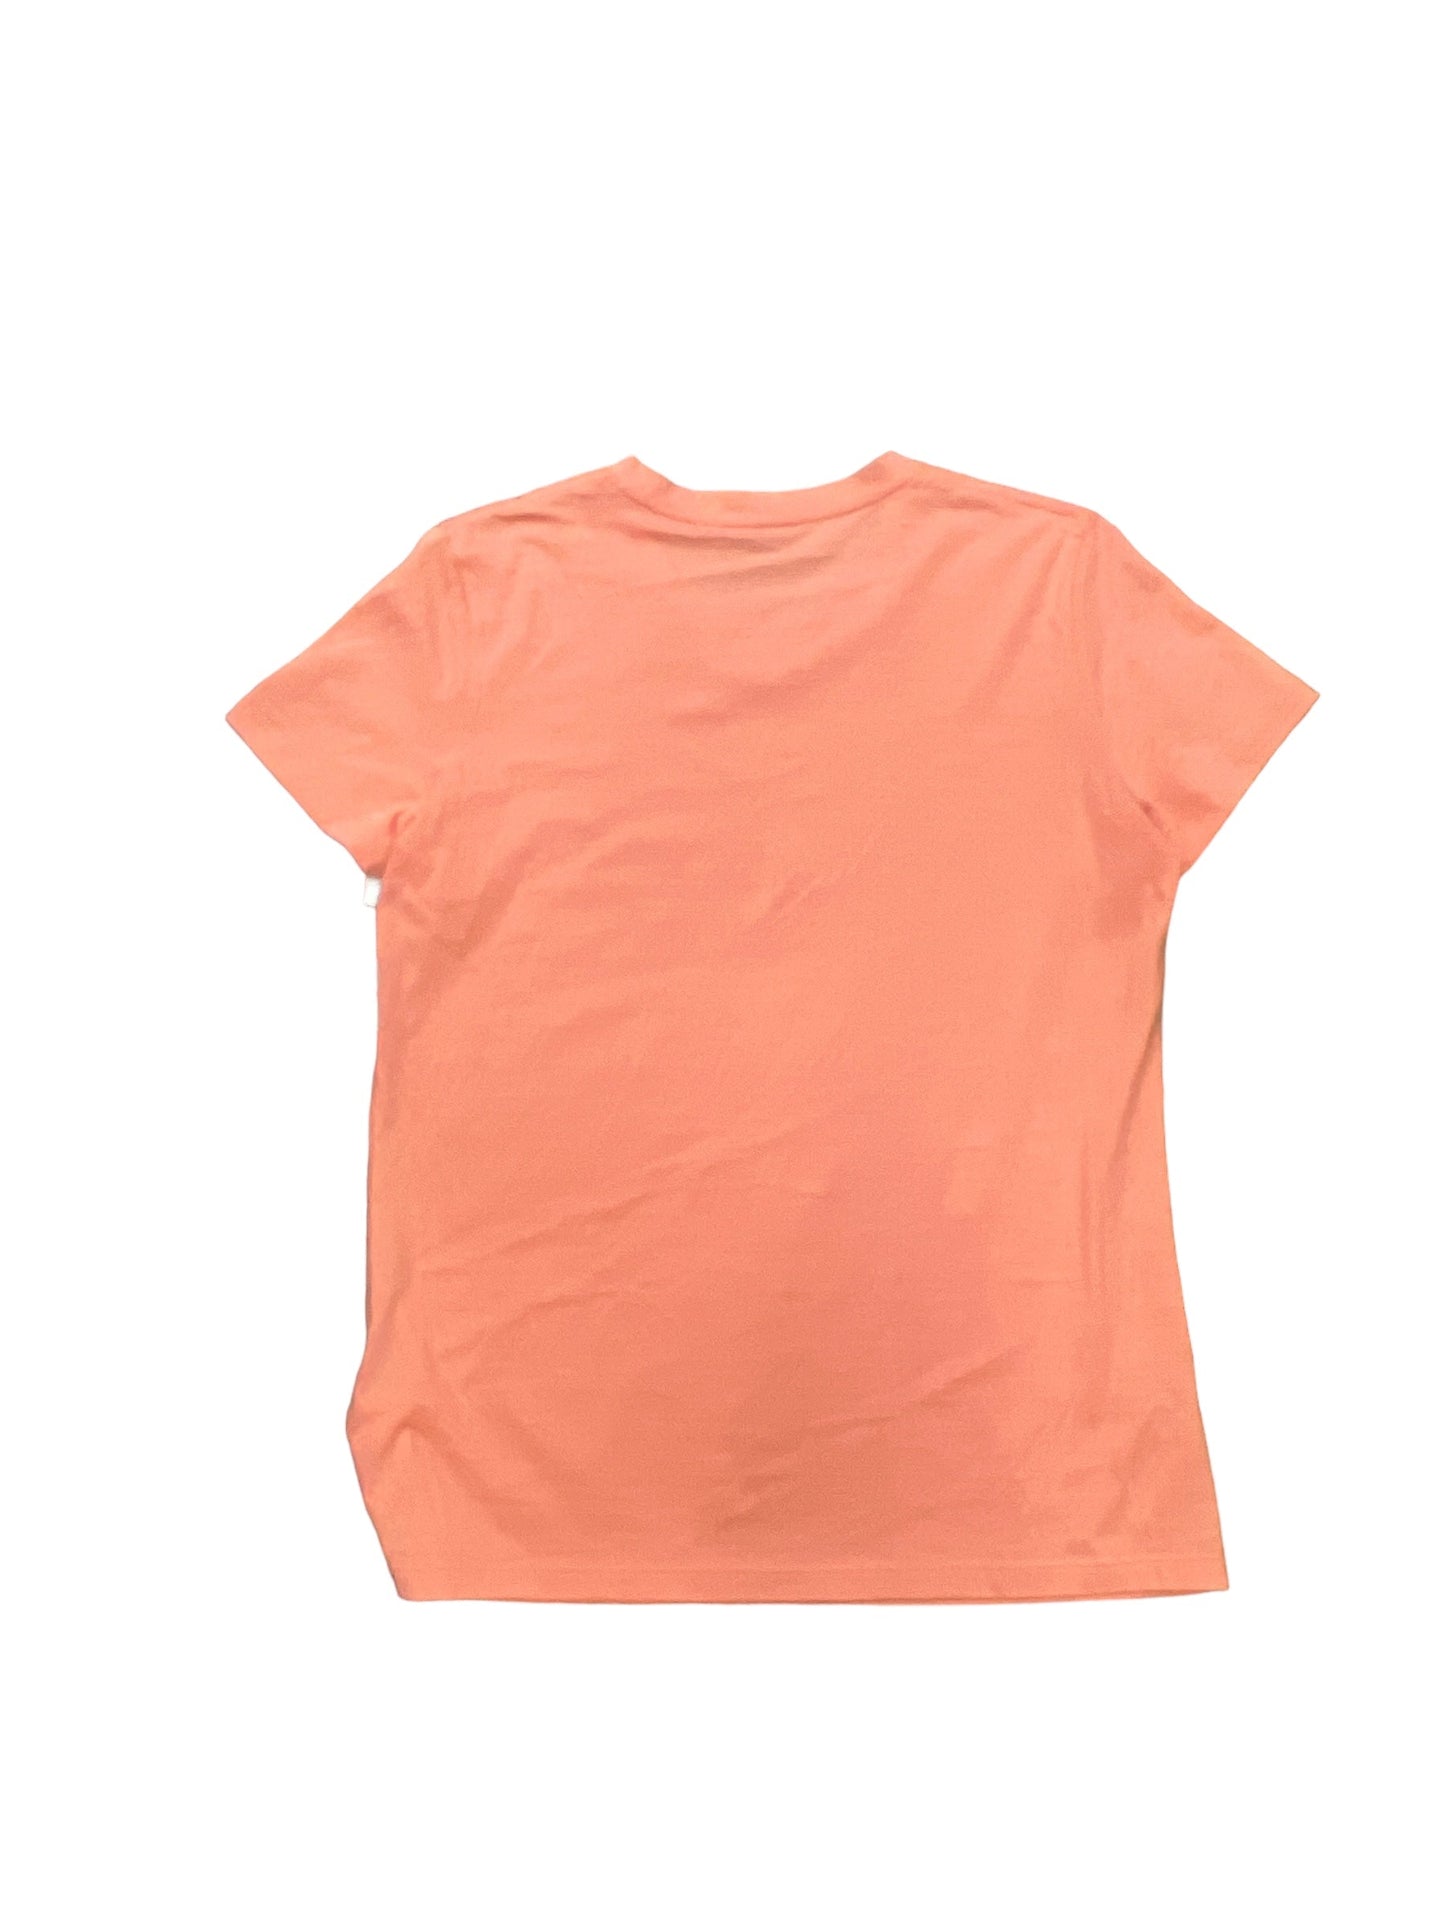 Orange Top Short Sleeve Basic Vince, Size M